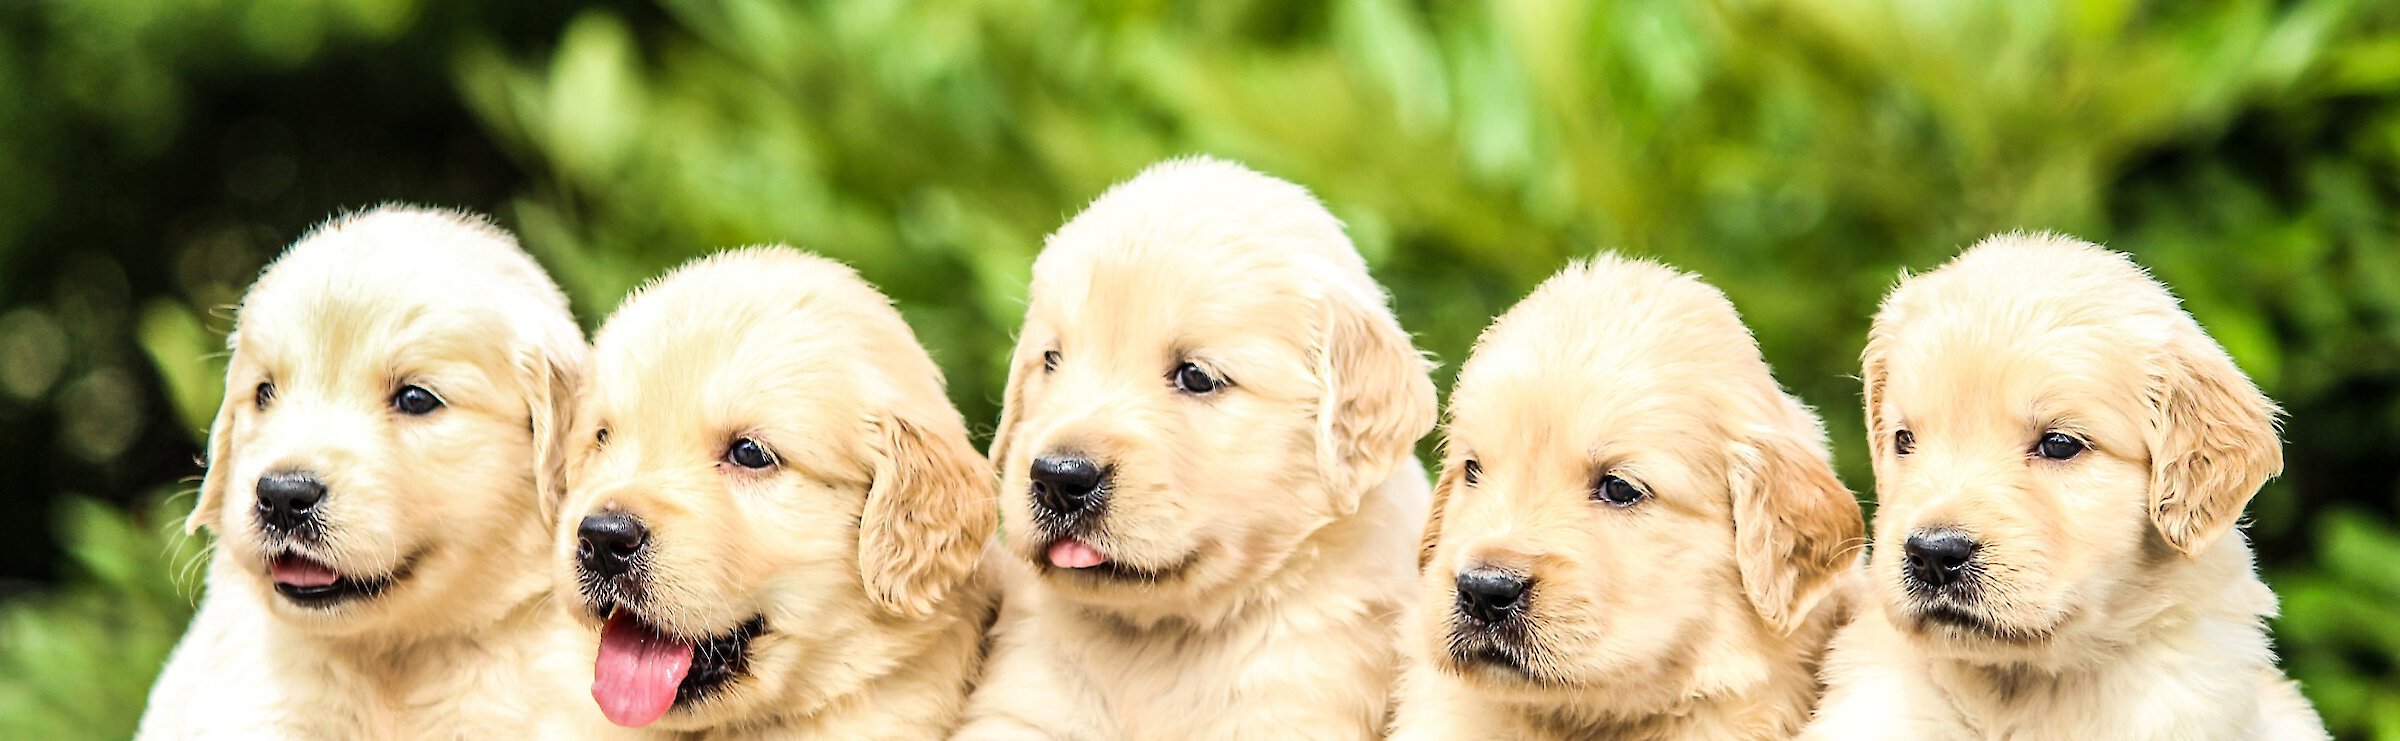 Five cute puppies